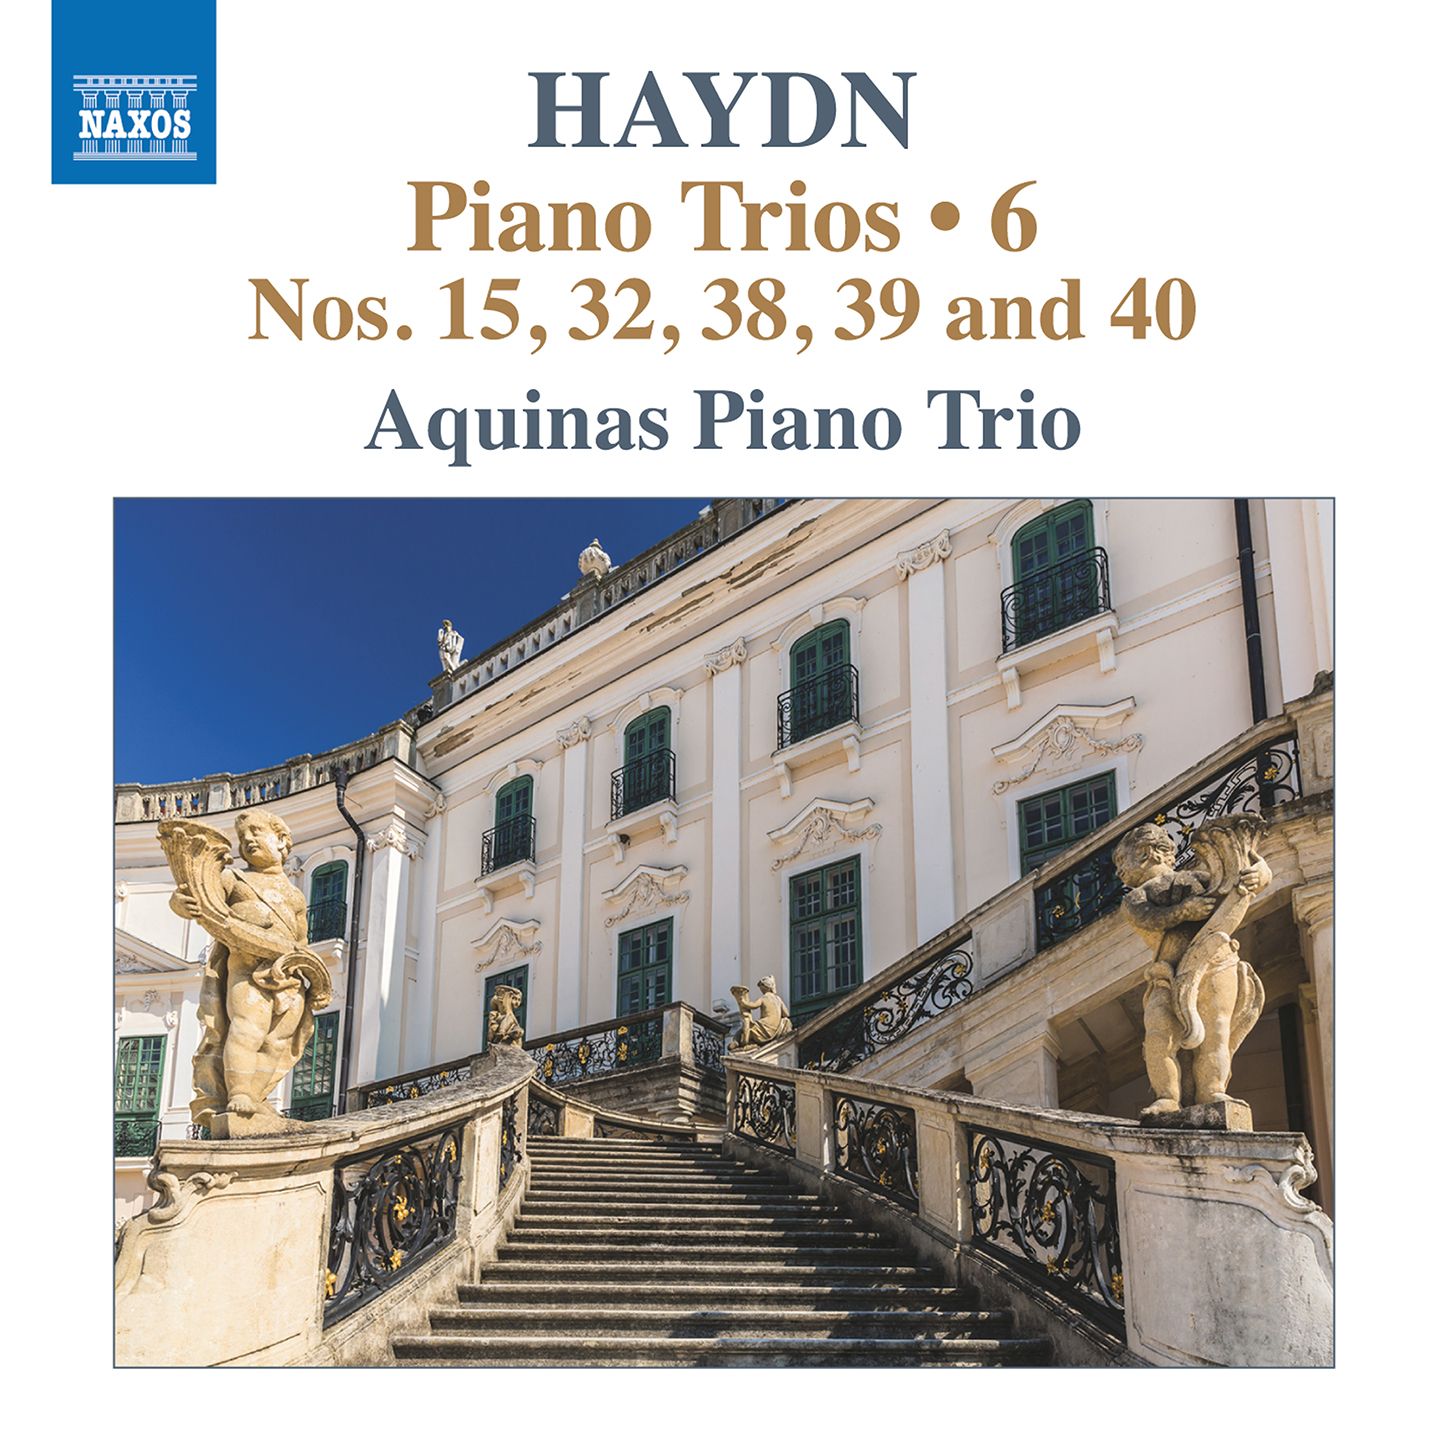 A brace of Haydn Piano Trio discs: Chandos & Naxos